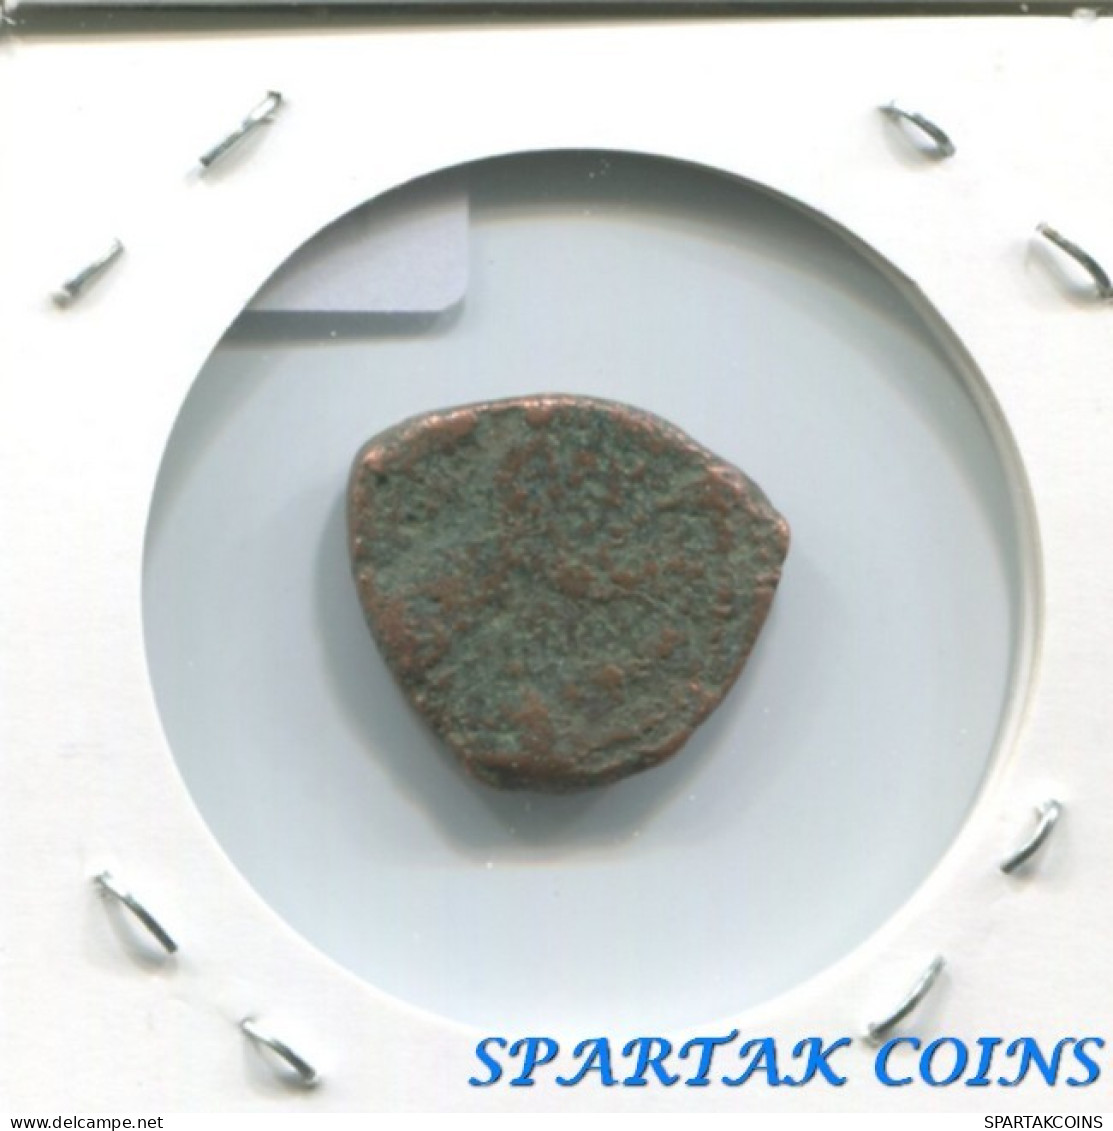 Authentic Original Ancient BYZANTINE EMPIRE Coin #E19817.4.U.A - Byzantinische Münzen